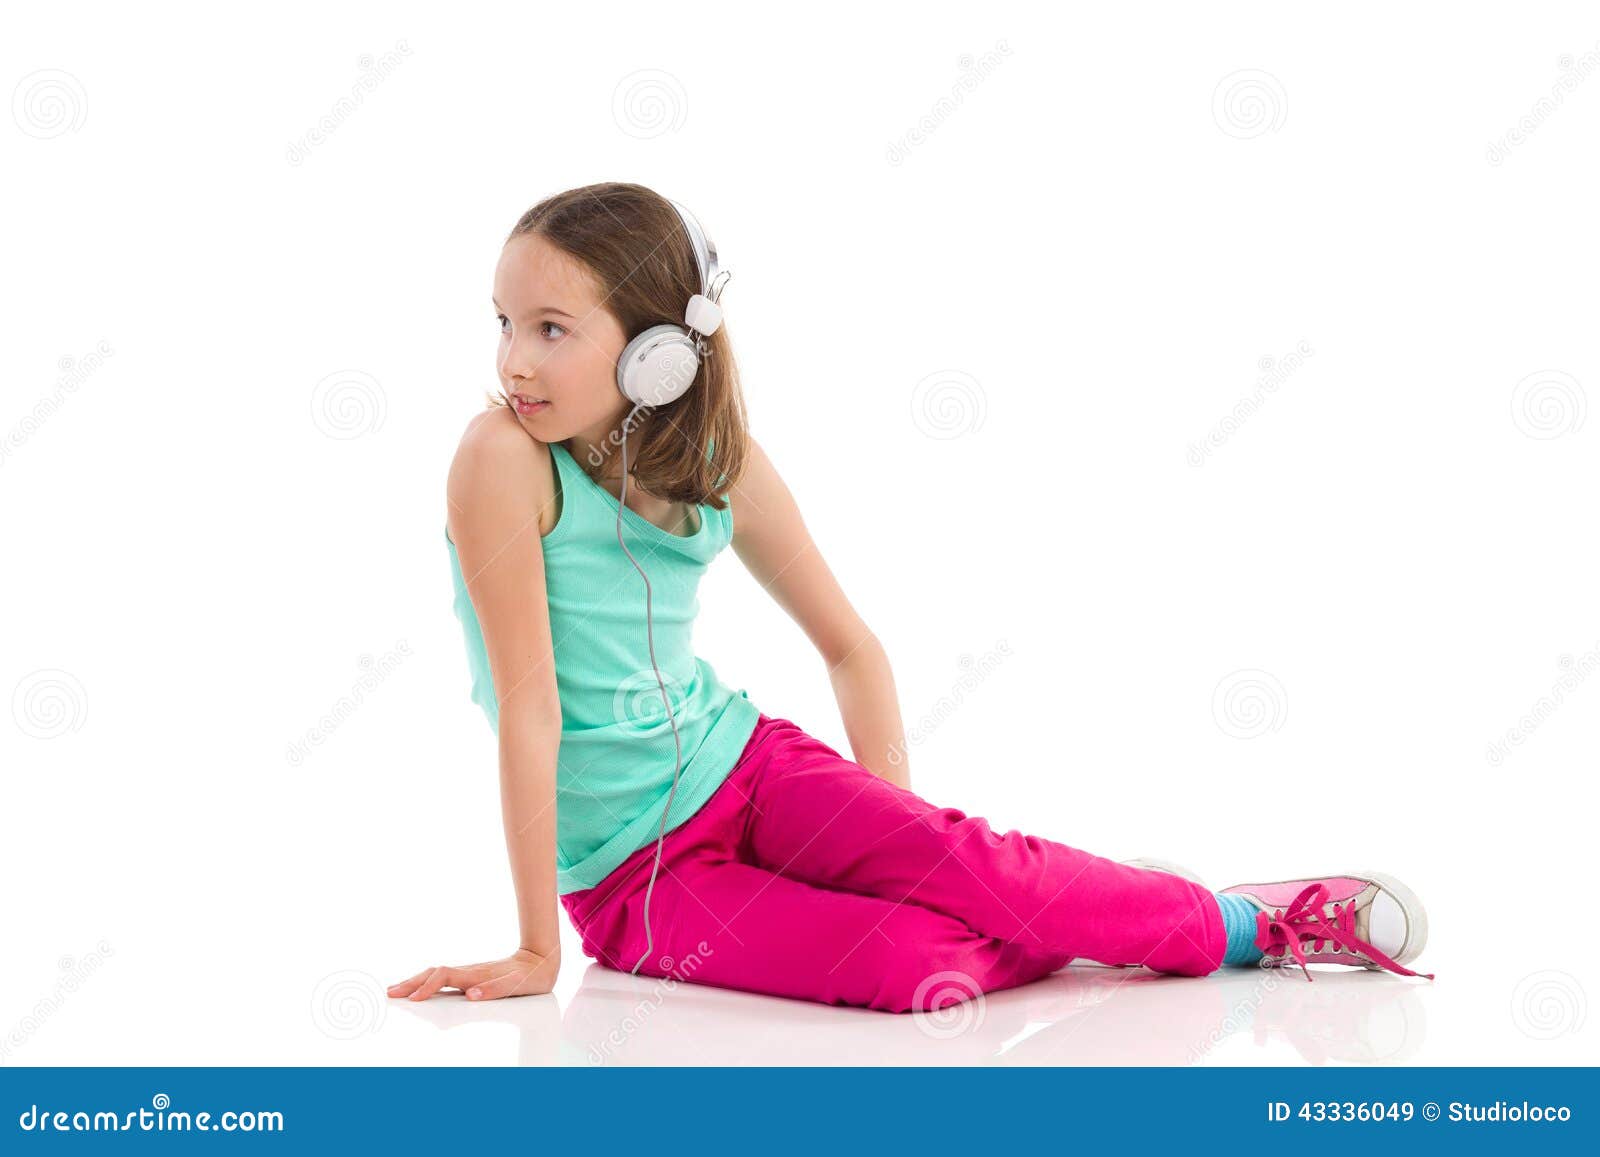 Little Girl In Headphones Looking Back Stock Image Image of headphones, comfortable 43336049